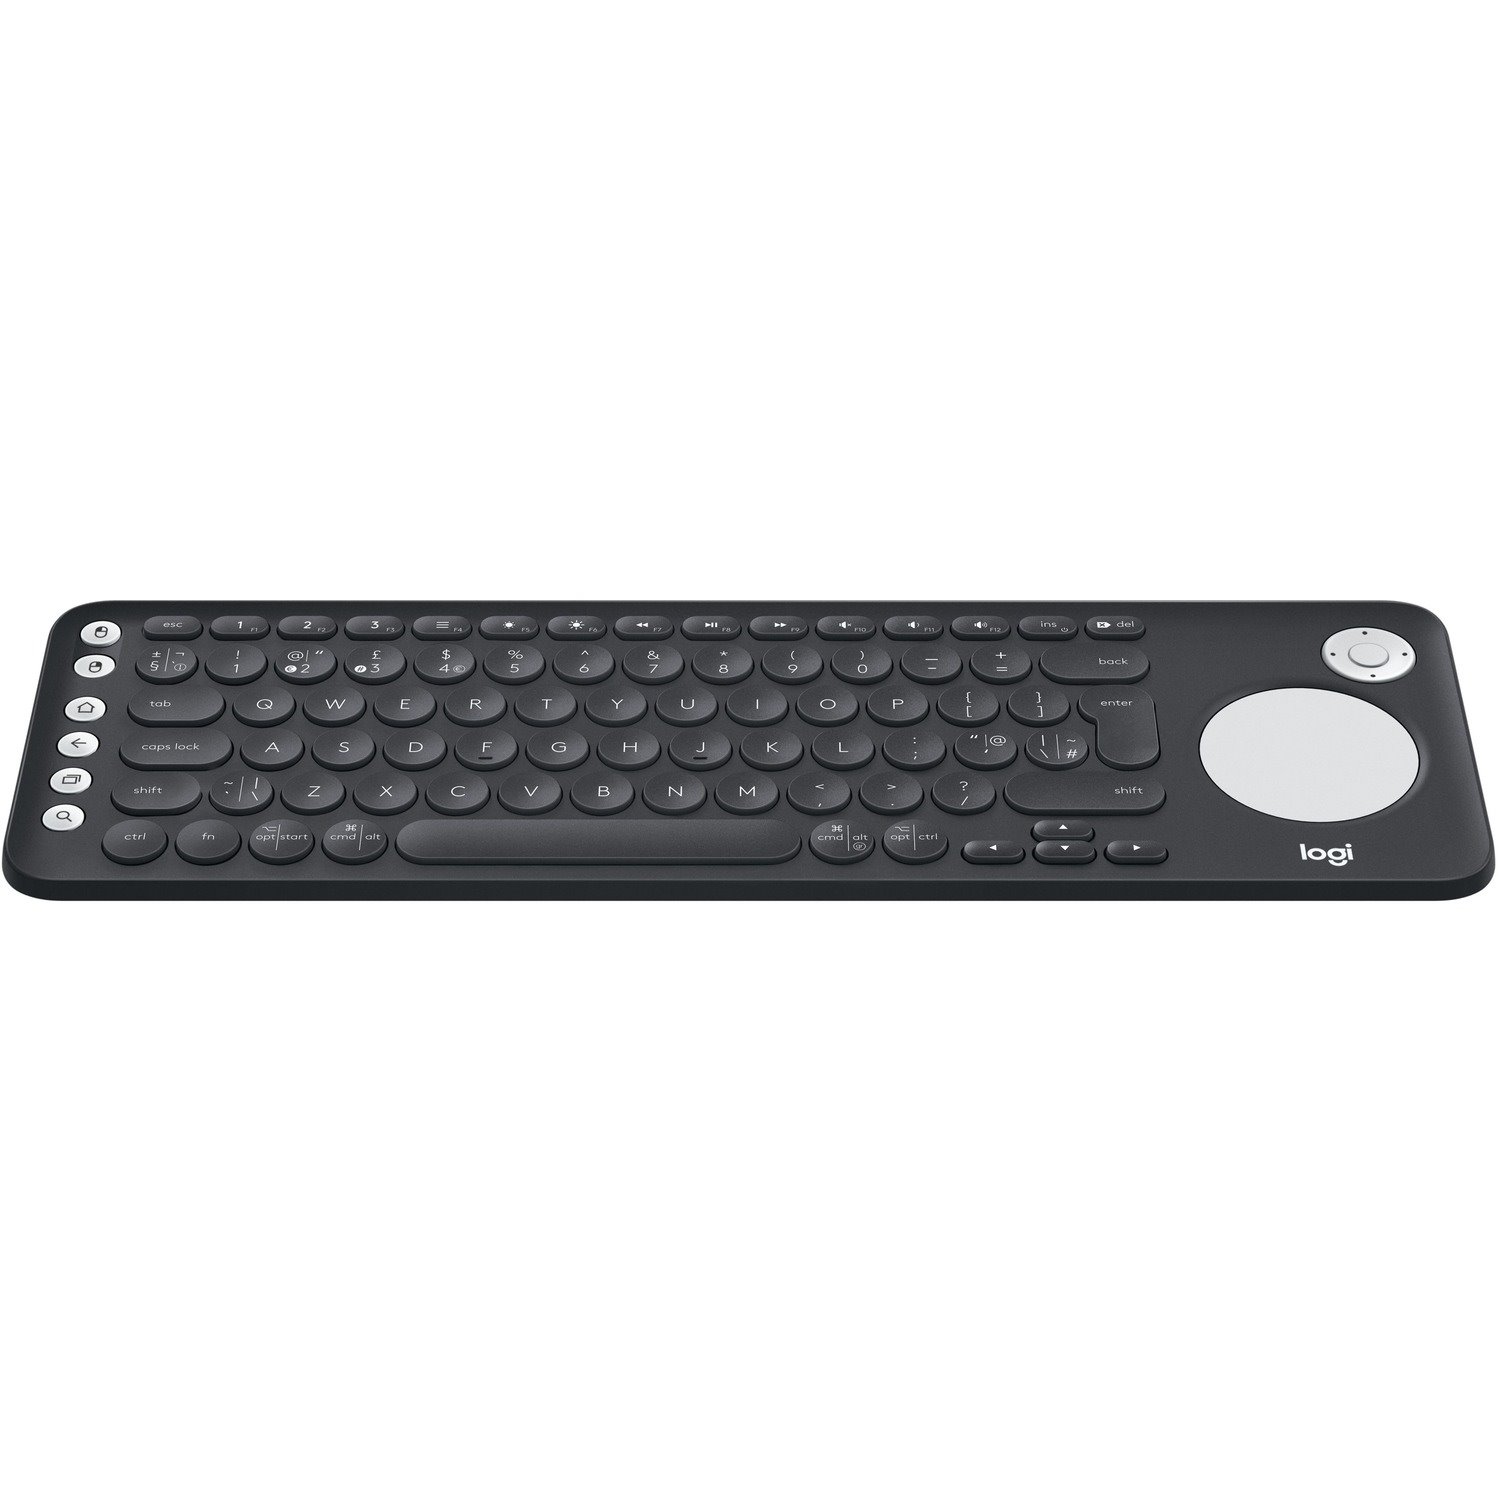 Logitech K600 Keyboard - Wireless Connectivity - USB Interface - D-pad, TouchPad